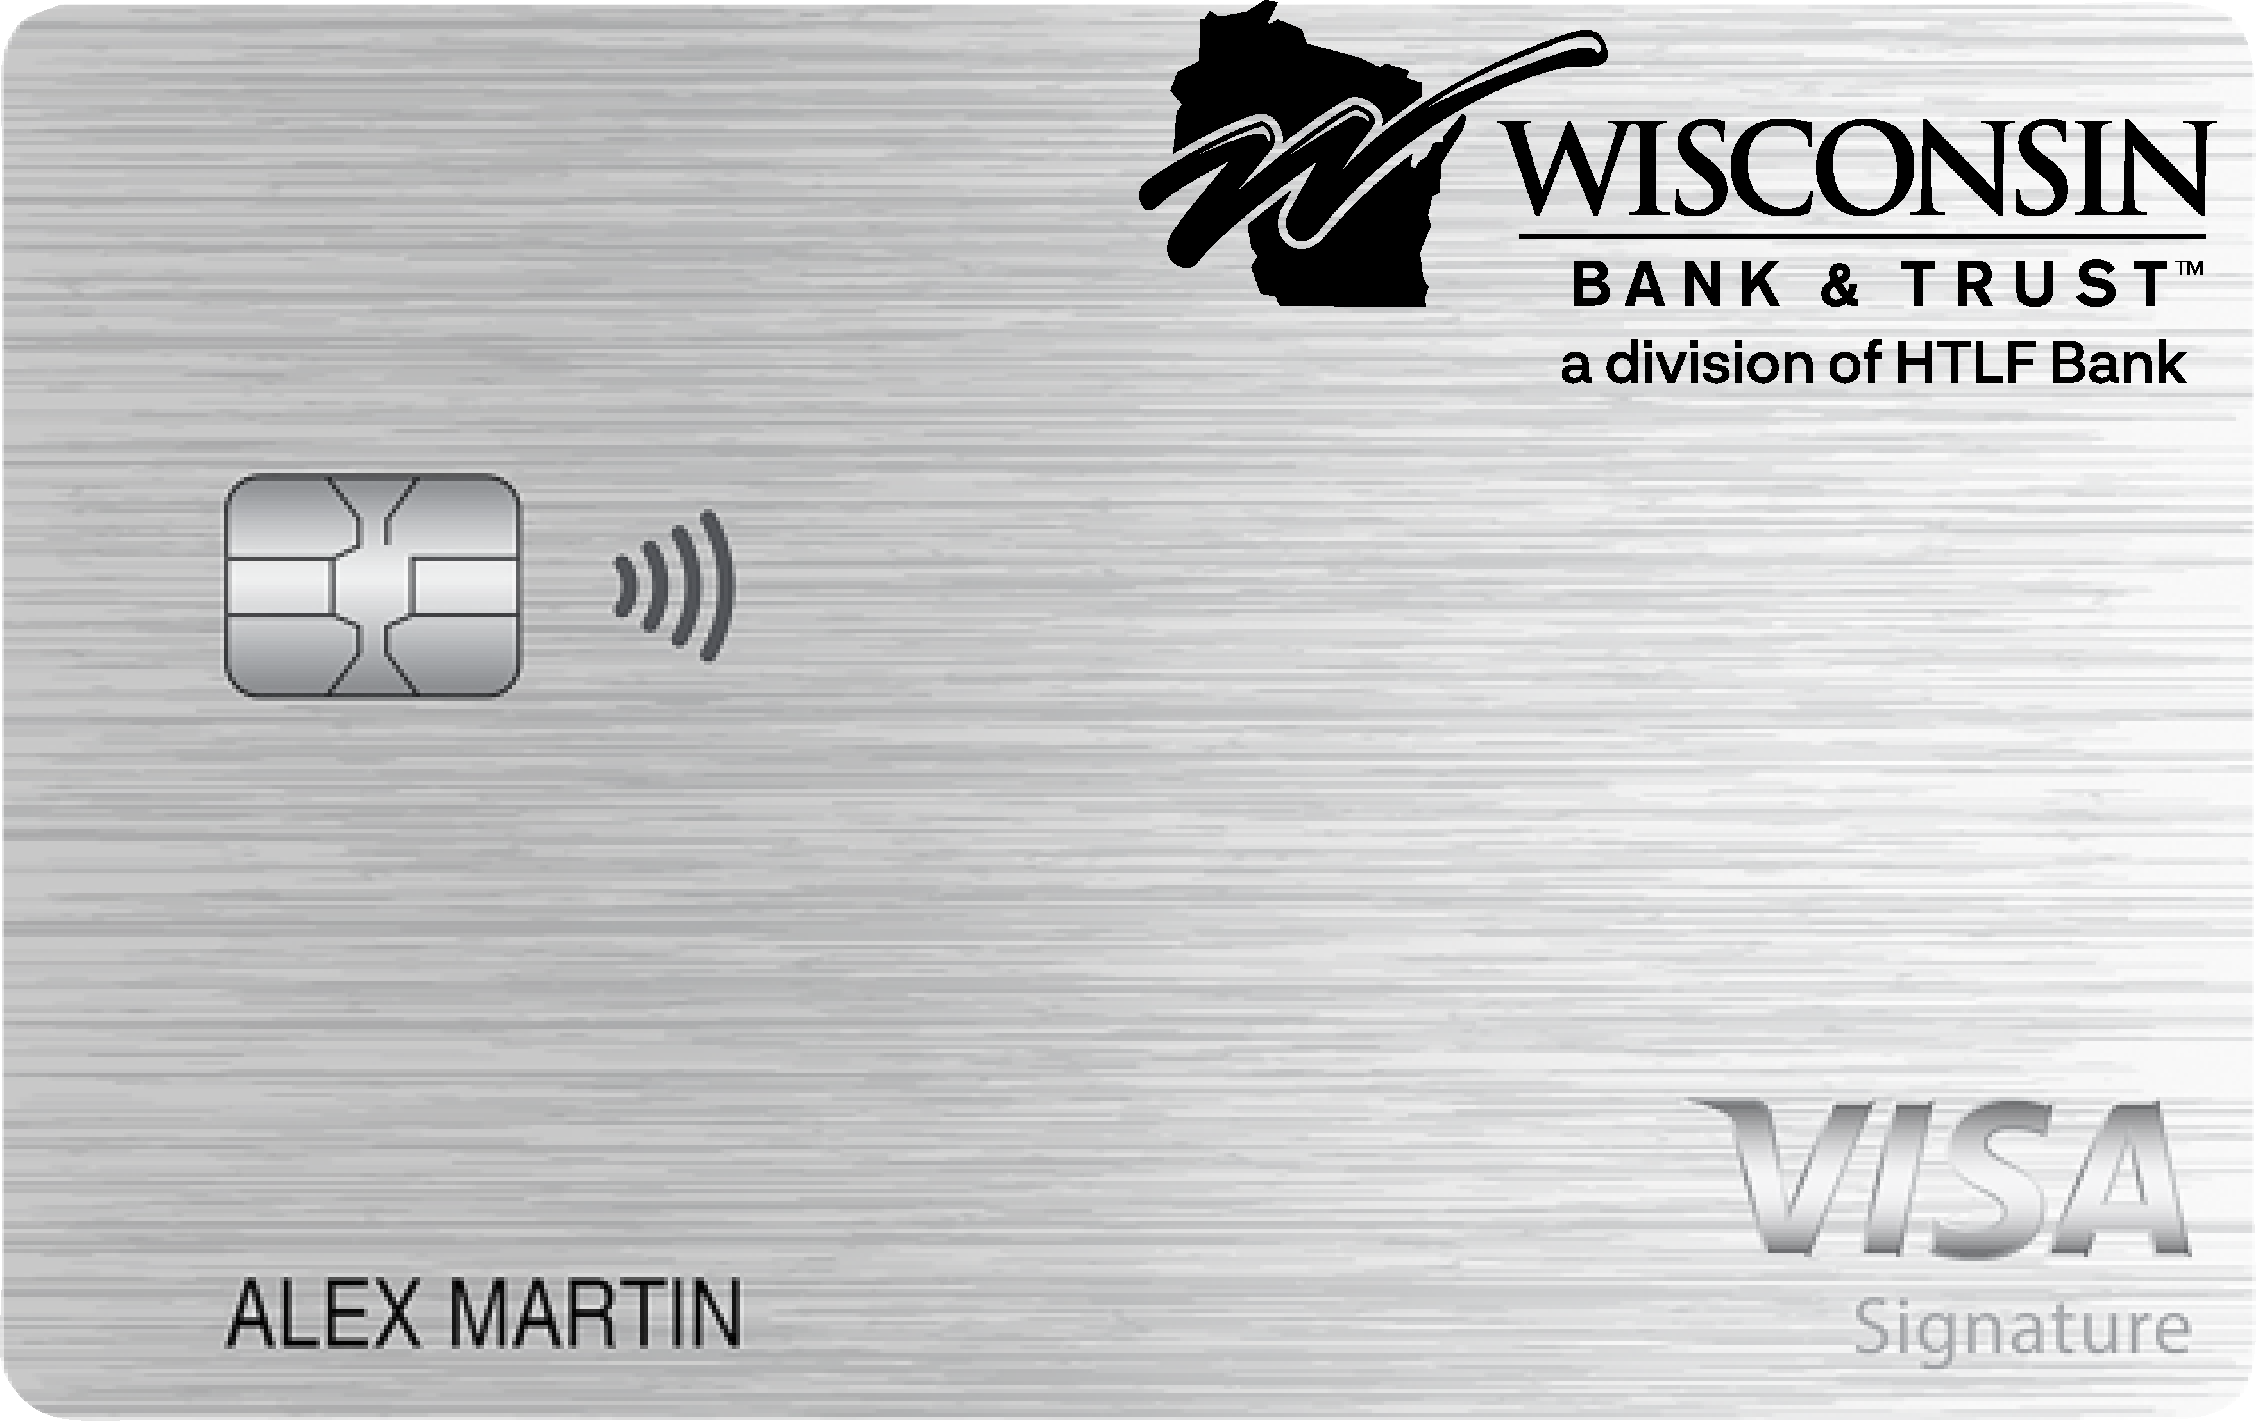 Wisconsin Bank & Trust Travel Rewards+ Card